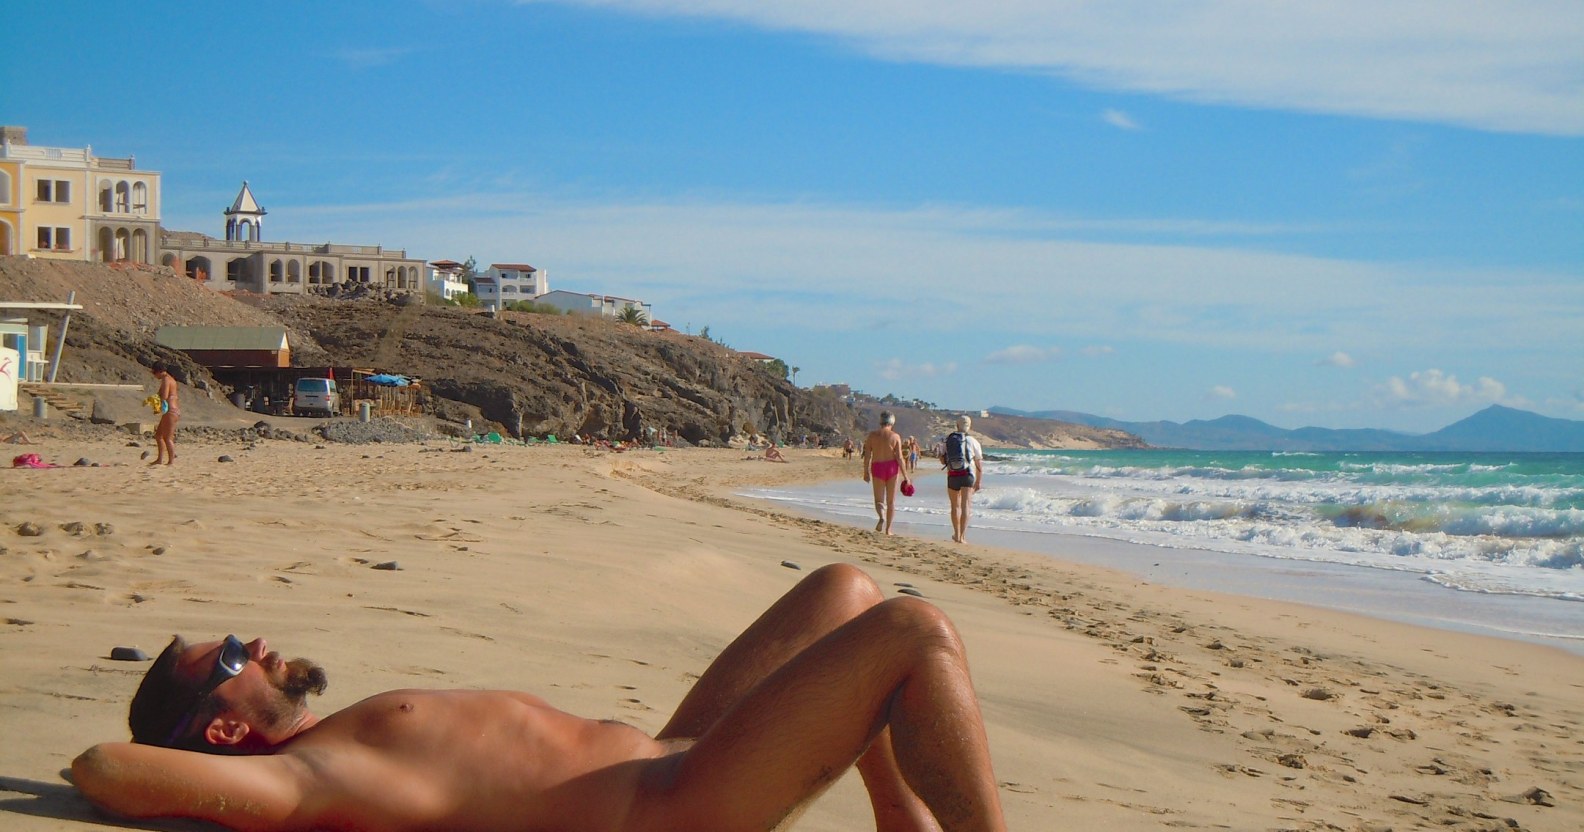 Adult Nudist Lifestyle - 10 best gay nude beaches in Europe | PinkNews